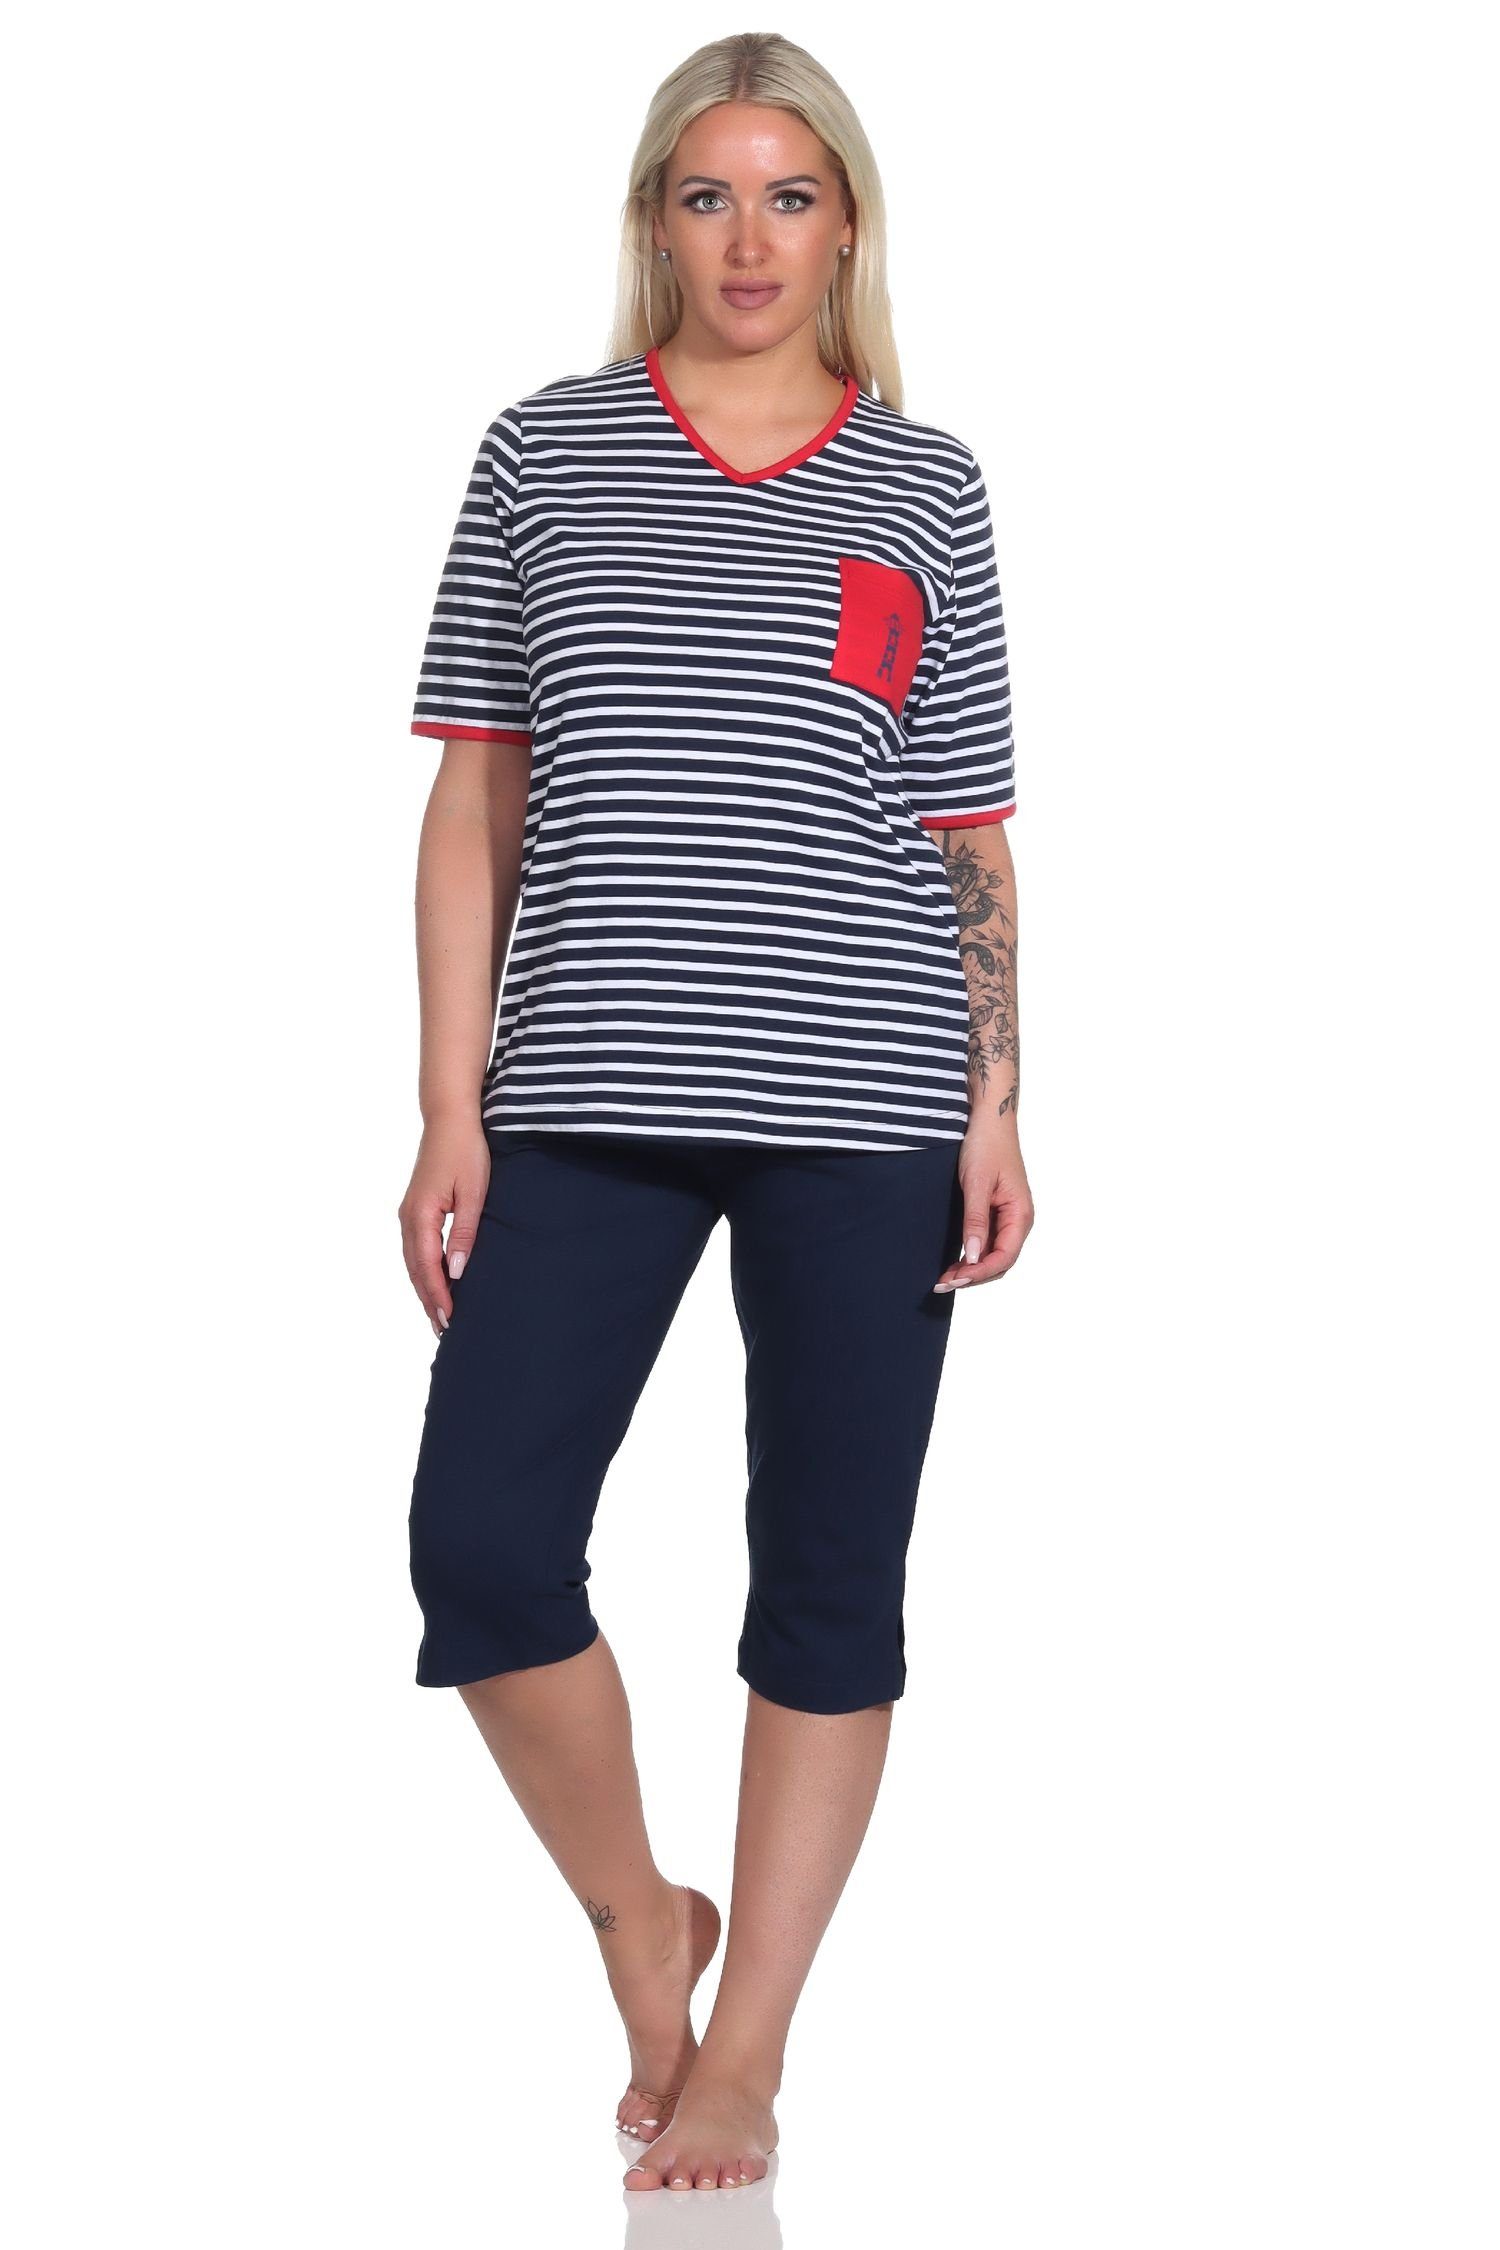 Leuchtturm Capri Damen marine und Kurzarm in Normann maritimer Motiv Optik Pyjama Pyjama